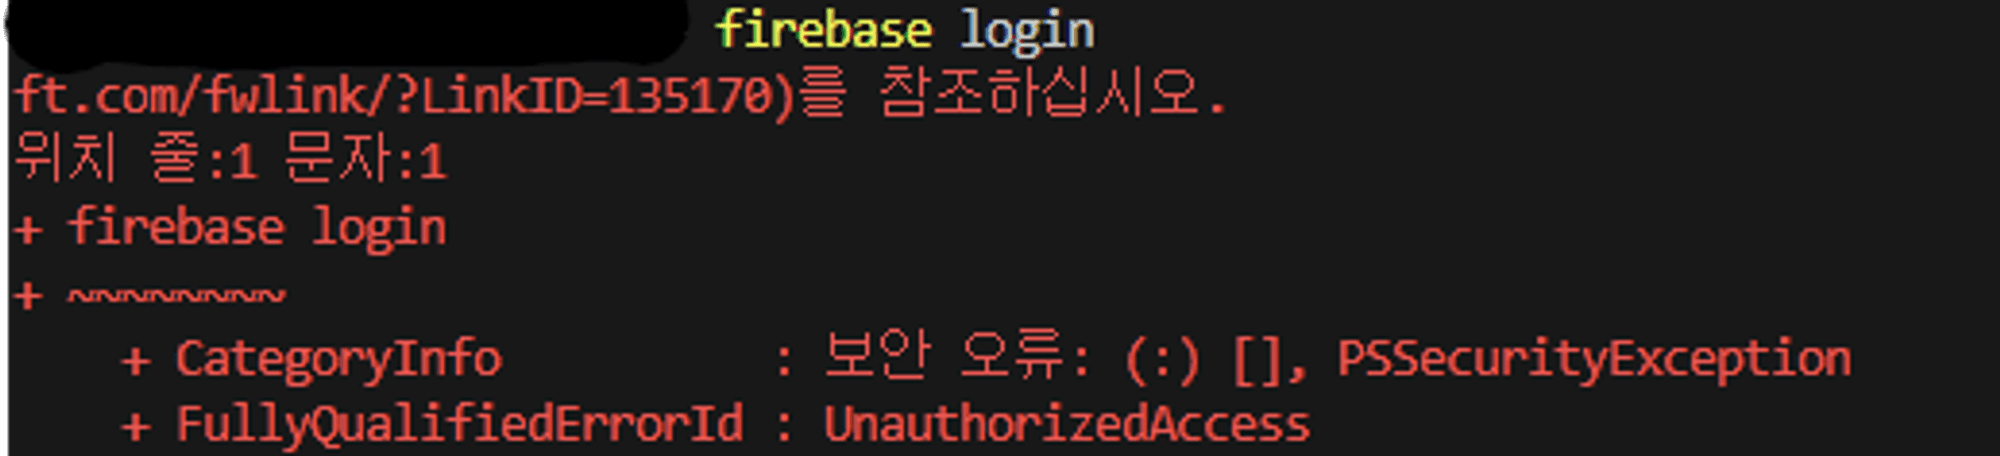 [VSCode] Firebase login PSSecurityException 오류 / firebase : 이 시스템에서 스크립트를 실행할 수 없으므로 firebase.ps1 파일을 로드할 수 없습니다.